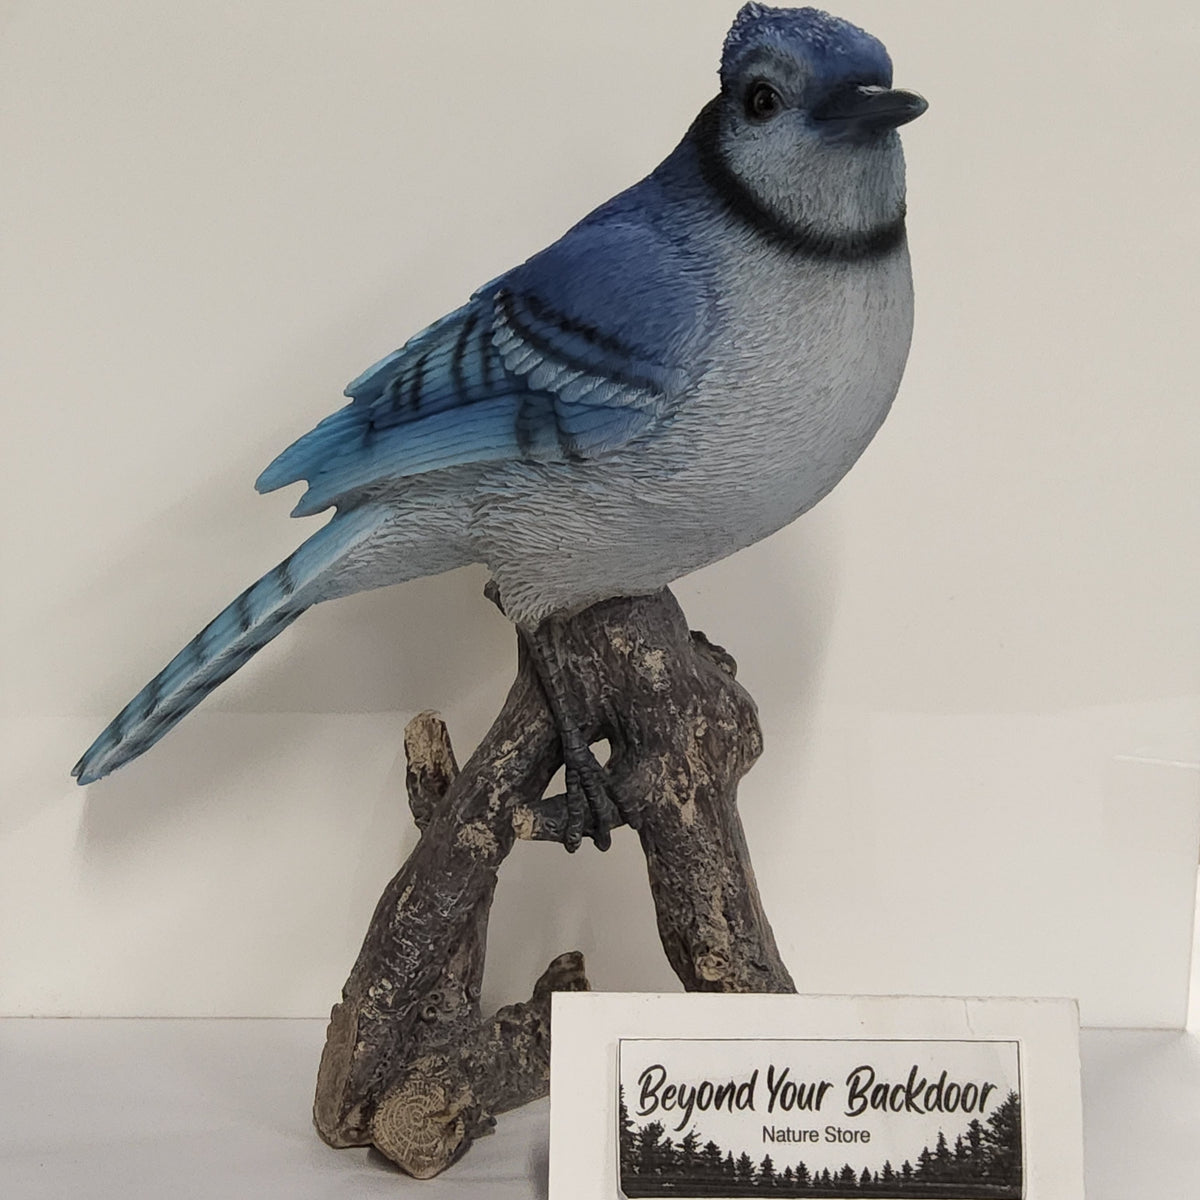 MLB Toronto Blue Jays Bird Figurine Collection